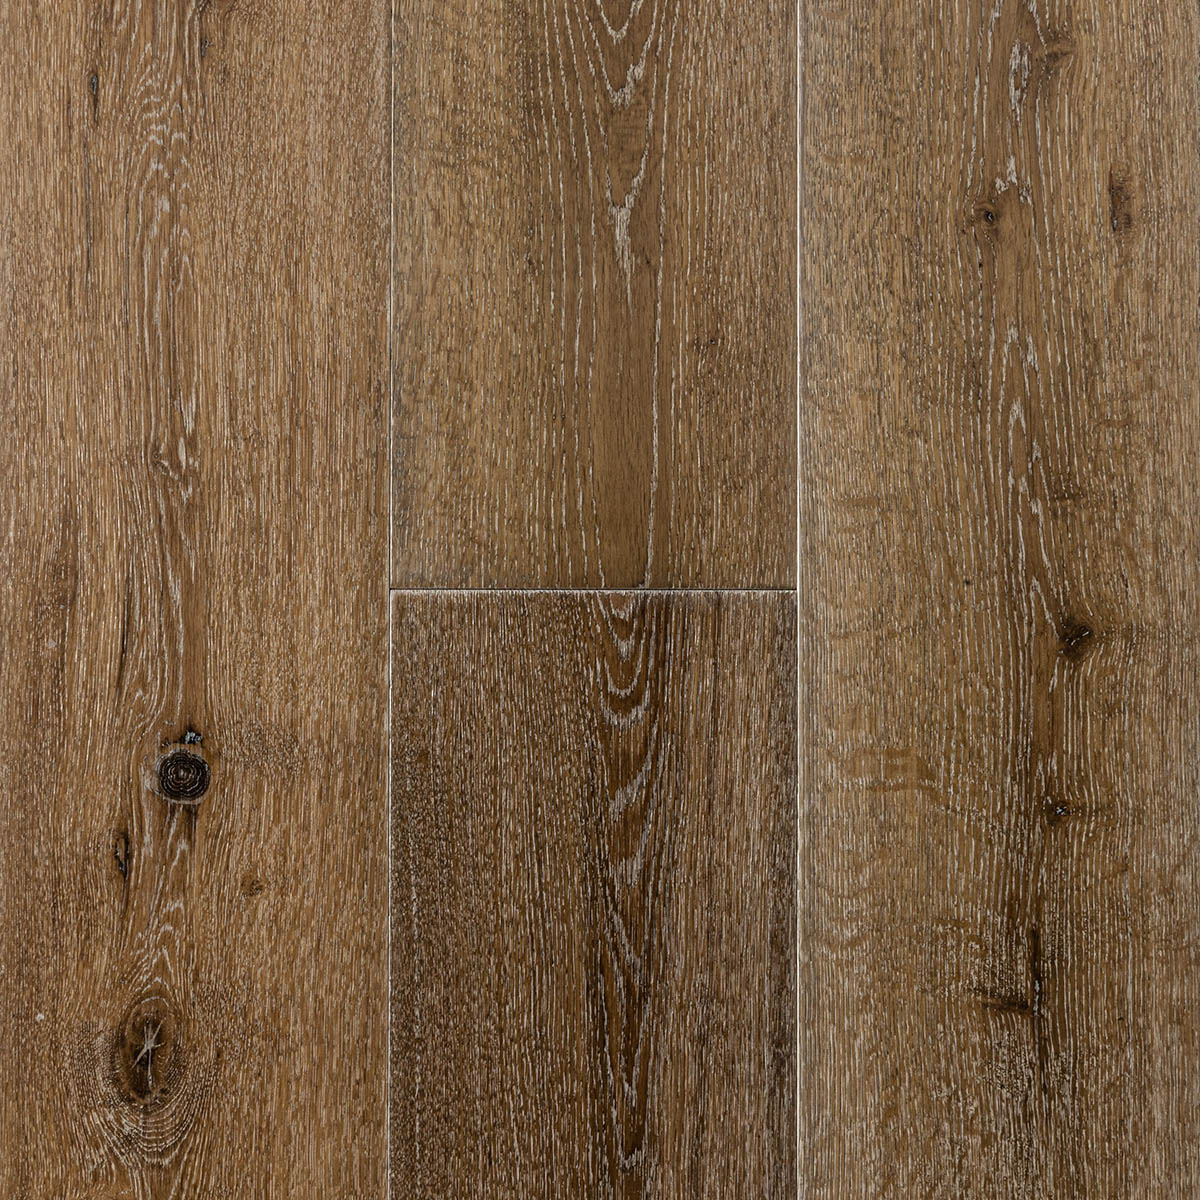 Drake Road - Lime-Washed Rustic Grade Engineered Oak Floor